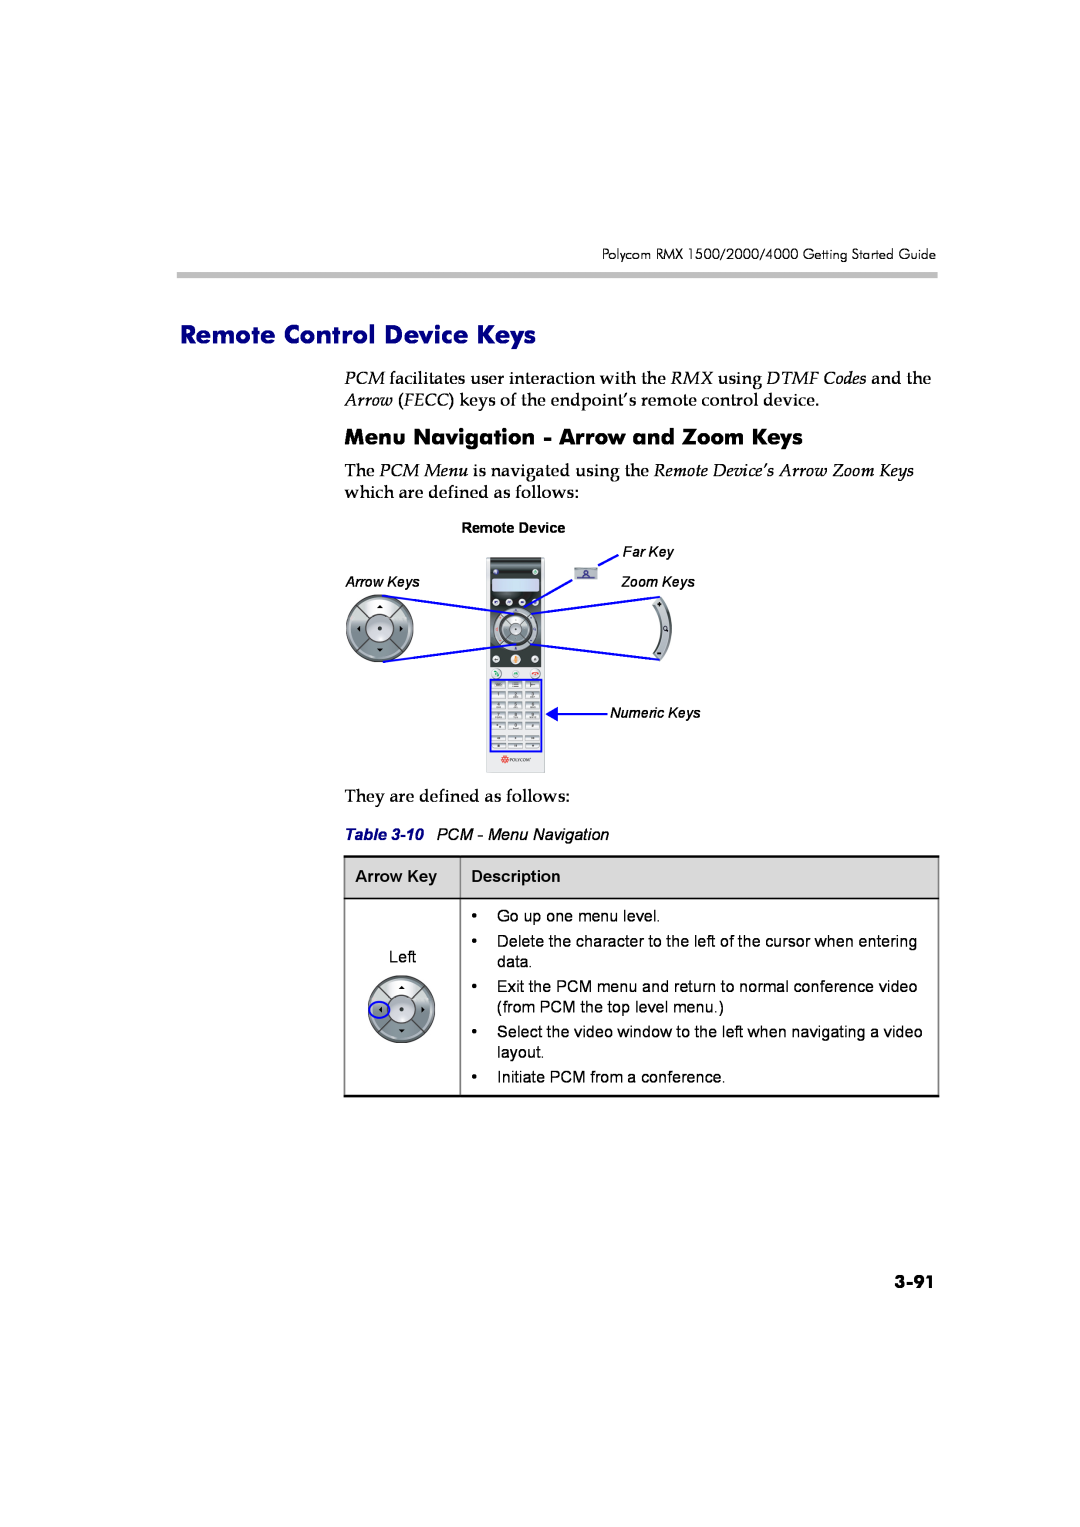 Polycom DOC2560B manual Remote Control Device Keys, Menu Navigation - Arrow and Zoom Keys, 3-91 